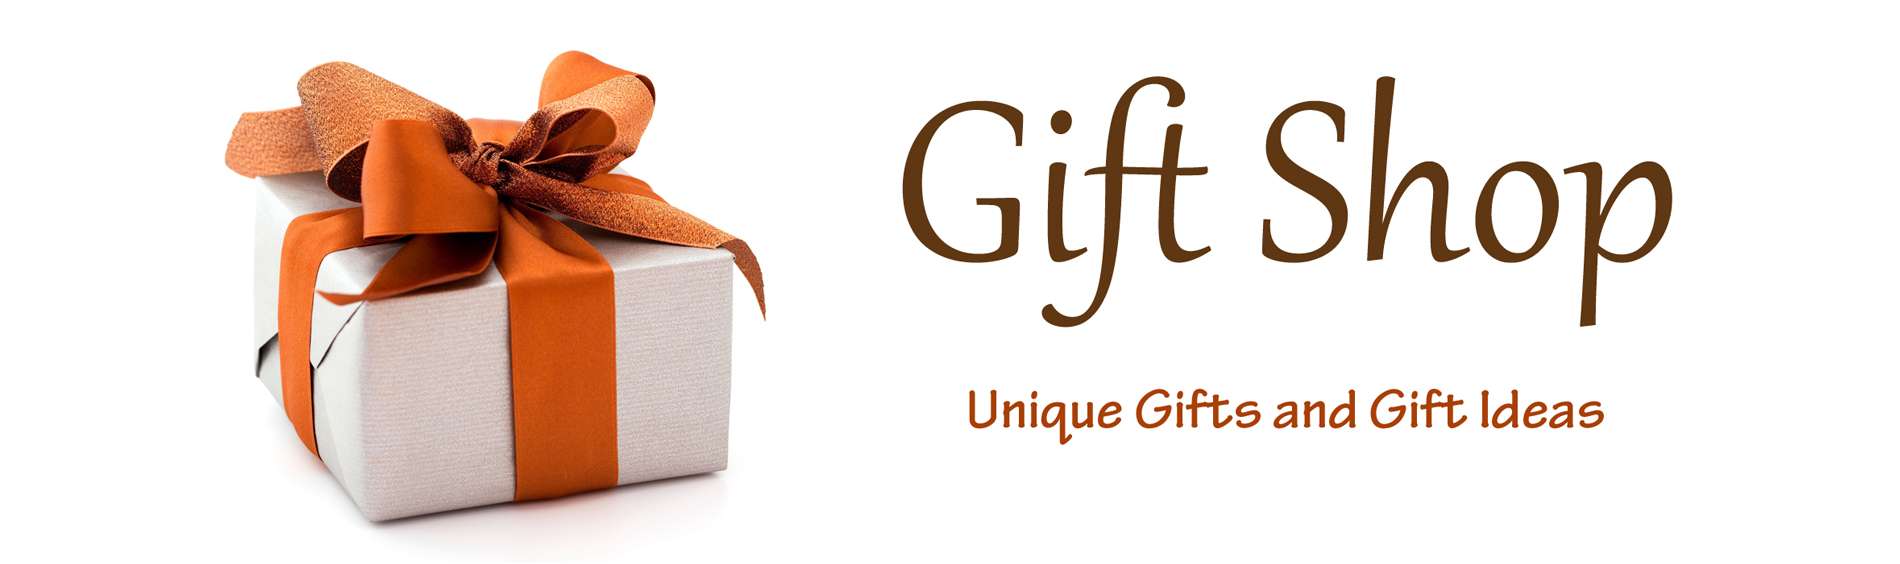 Gift Shop Box Banner FP